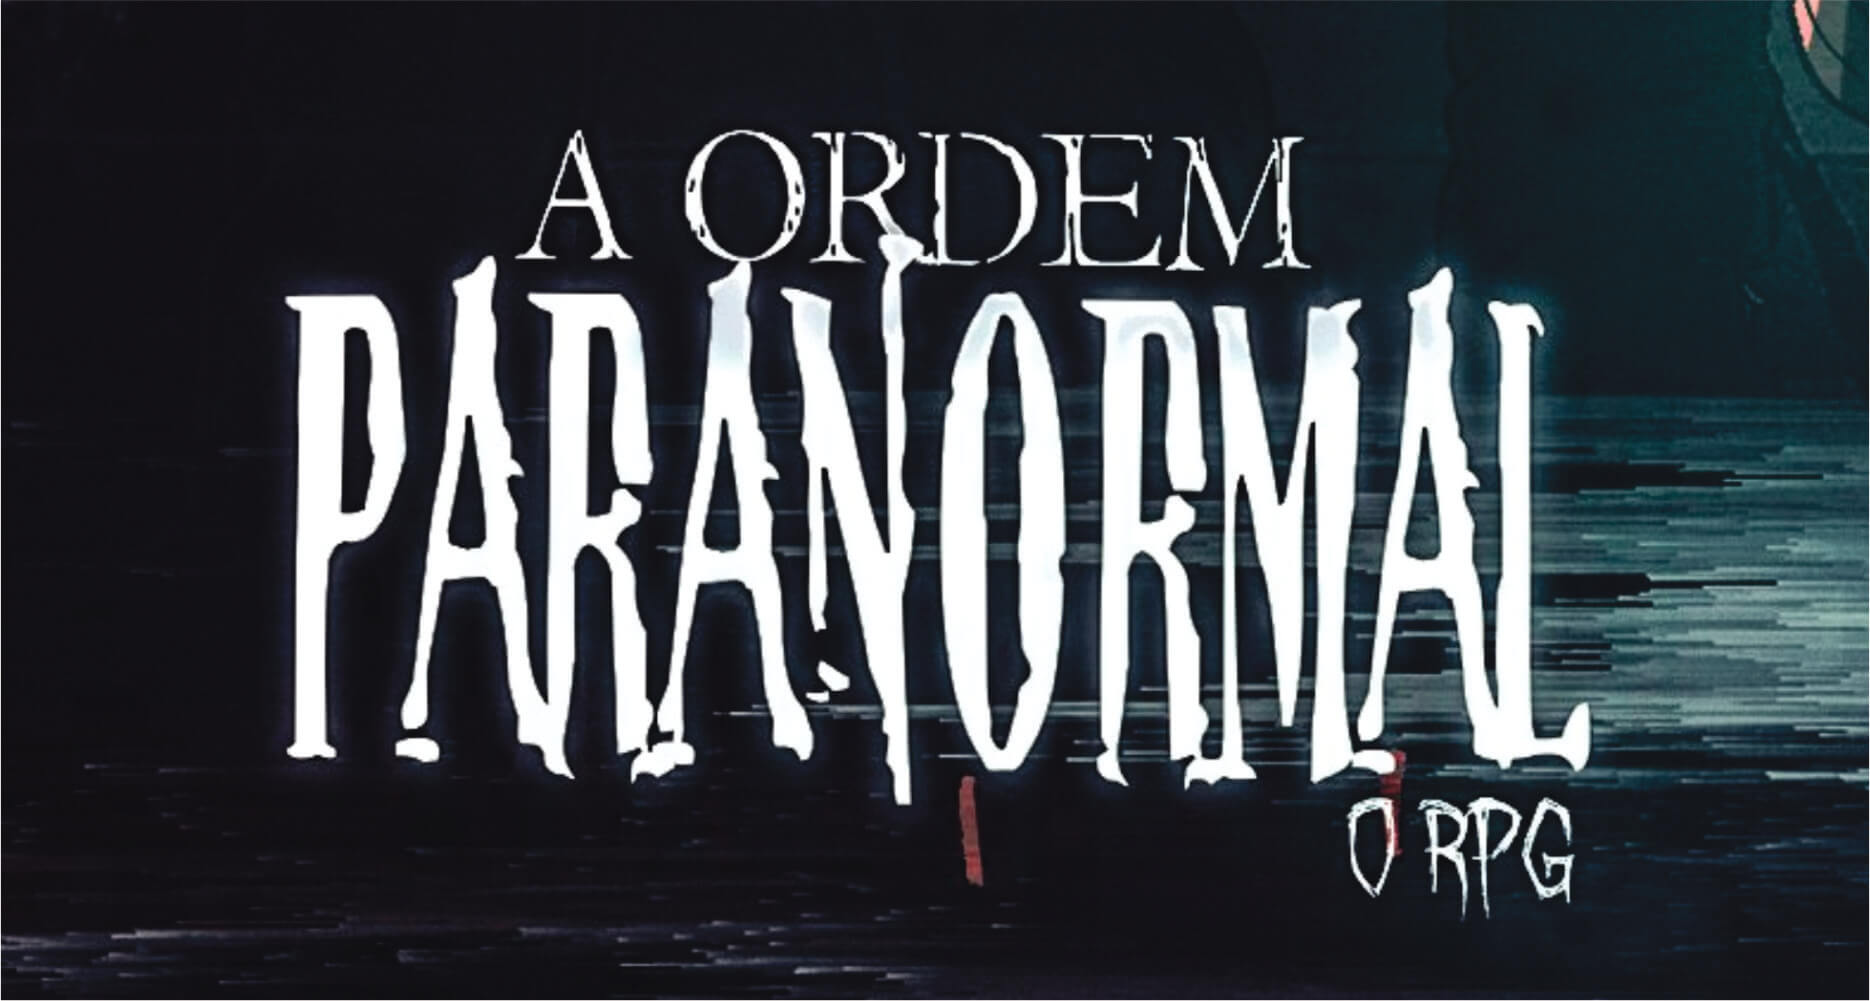 Site para jogar Ordem Paranormal online : r/OrdemParanormalRPG